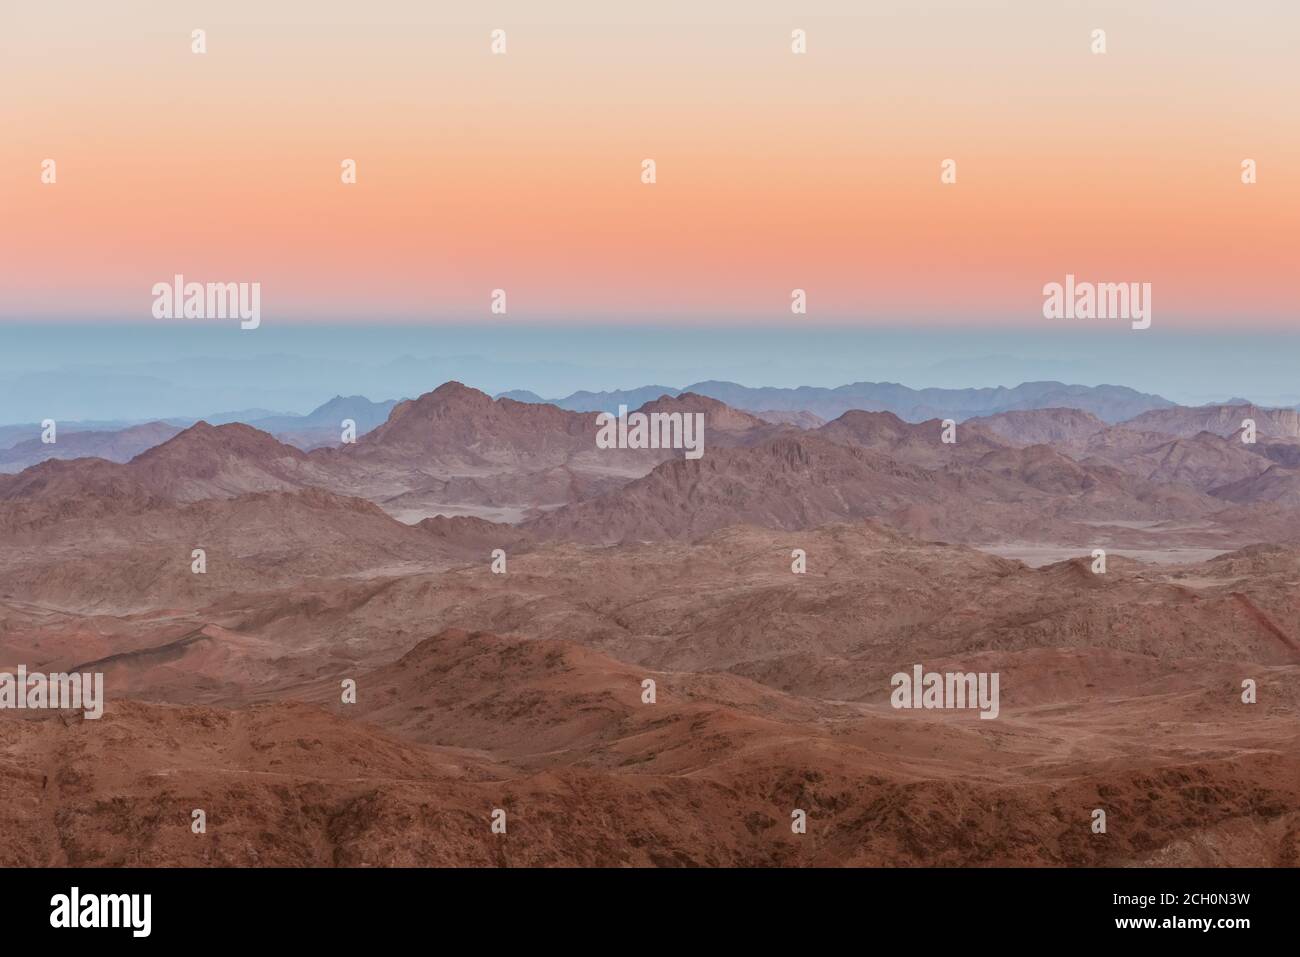 Gold Sonnenuntergang trockenen Wüste Landschaft mit Bergen silhouette Sinai, Ägypten Stockfoto